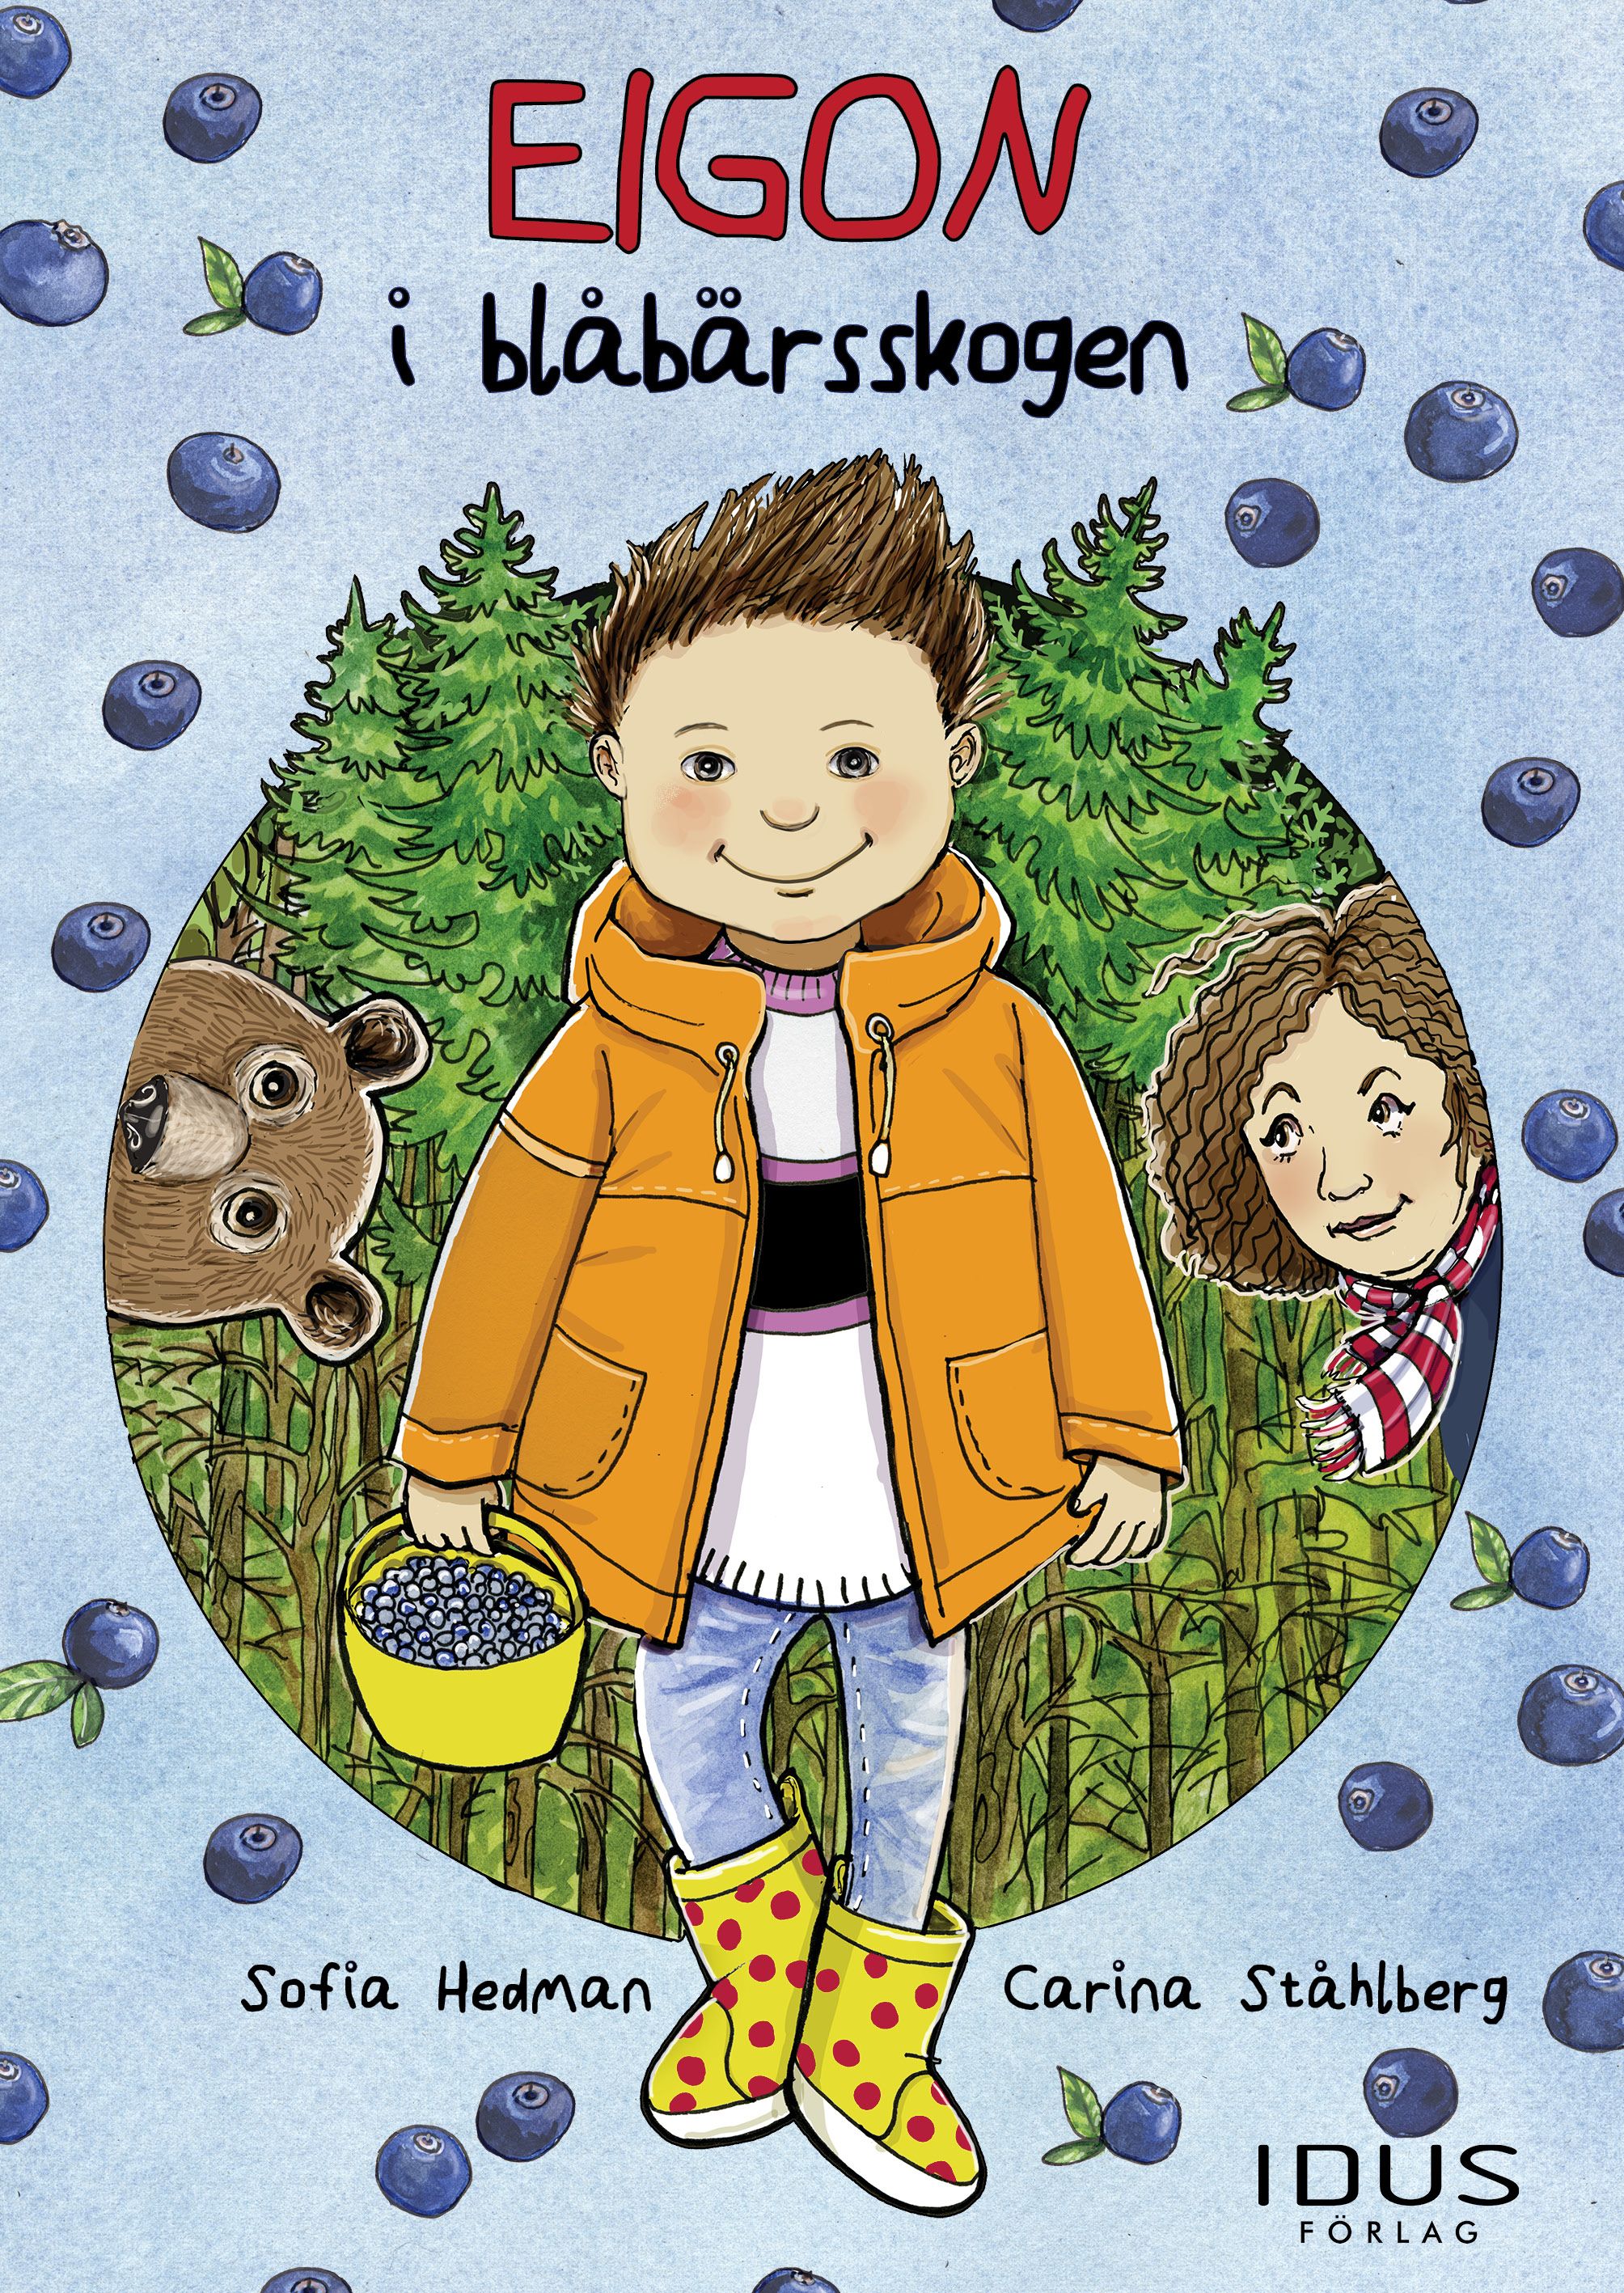 Eigon i blåbärsskogen, e-bok av Sofia Hedman